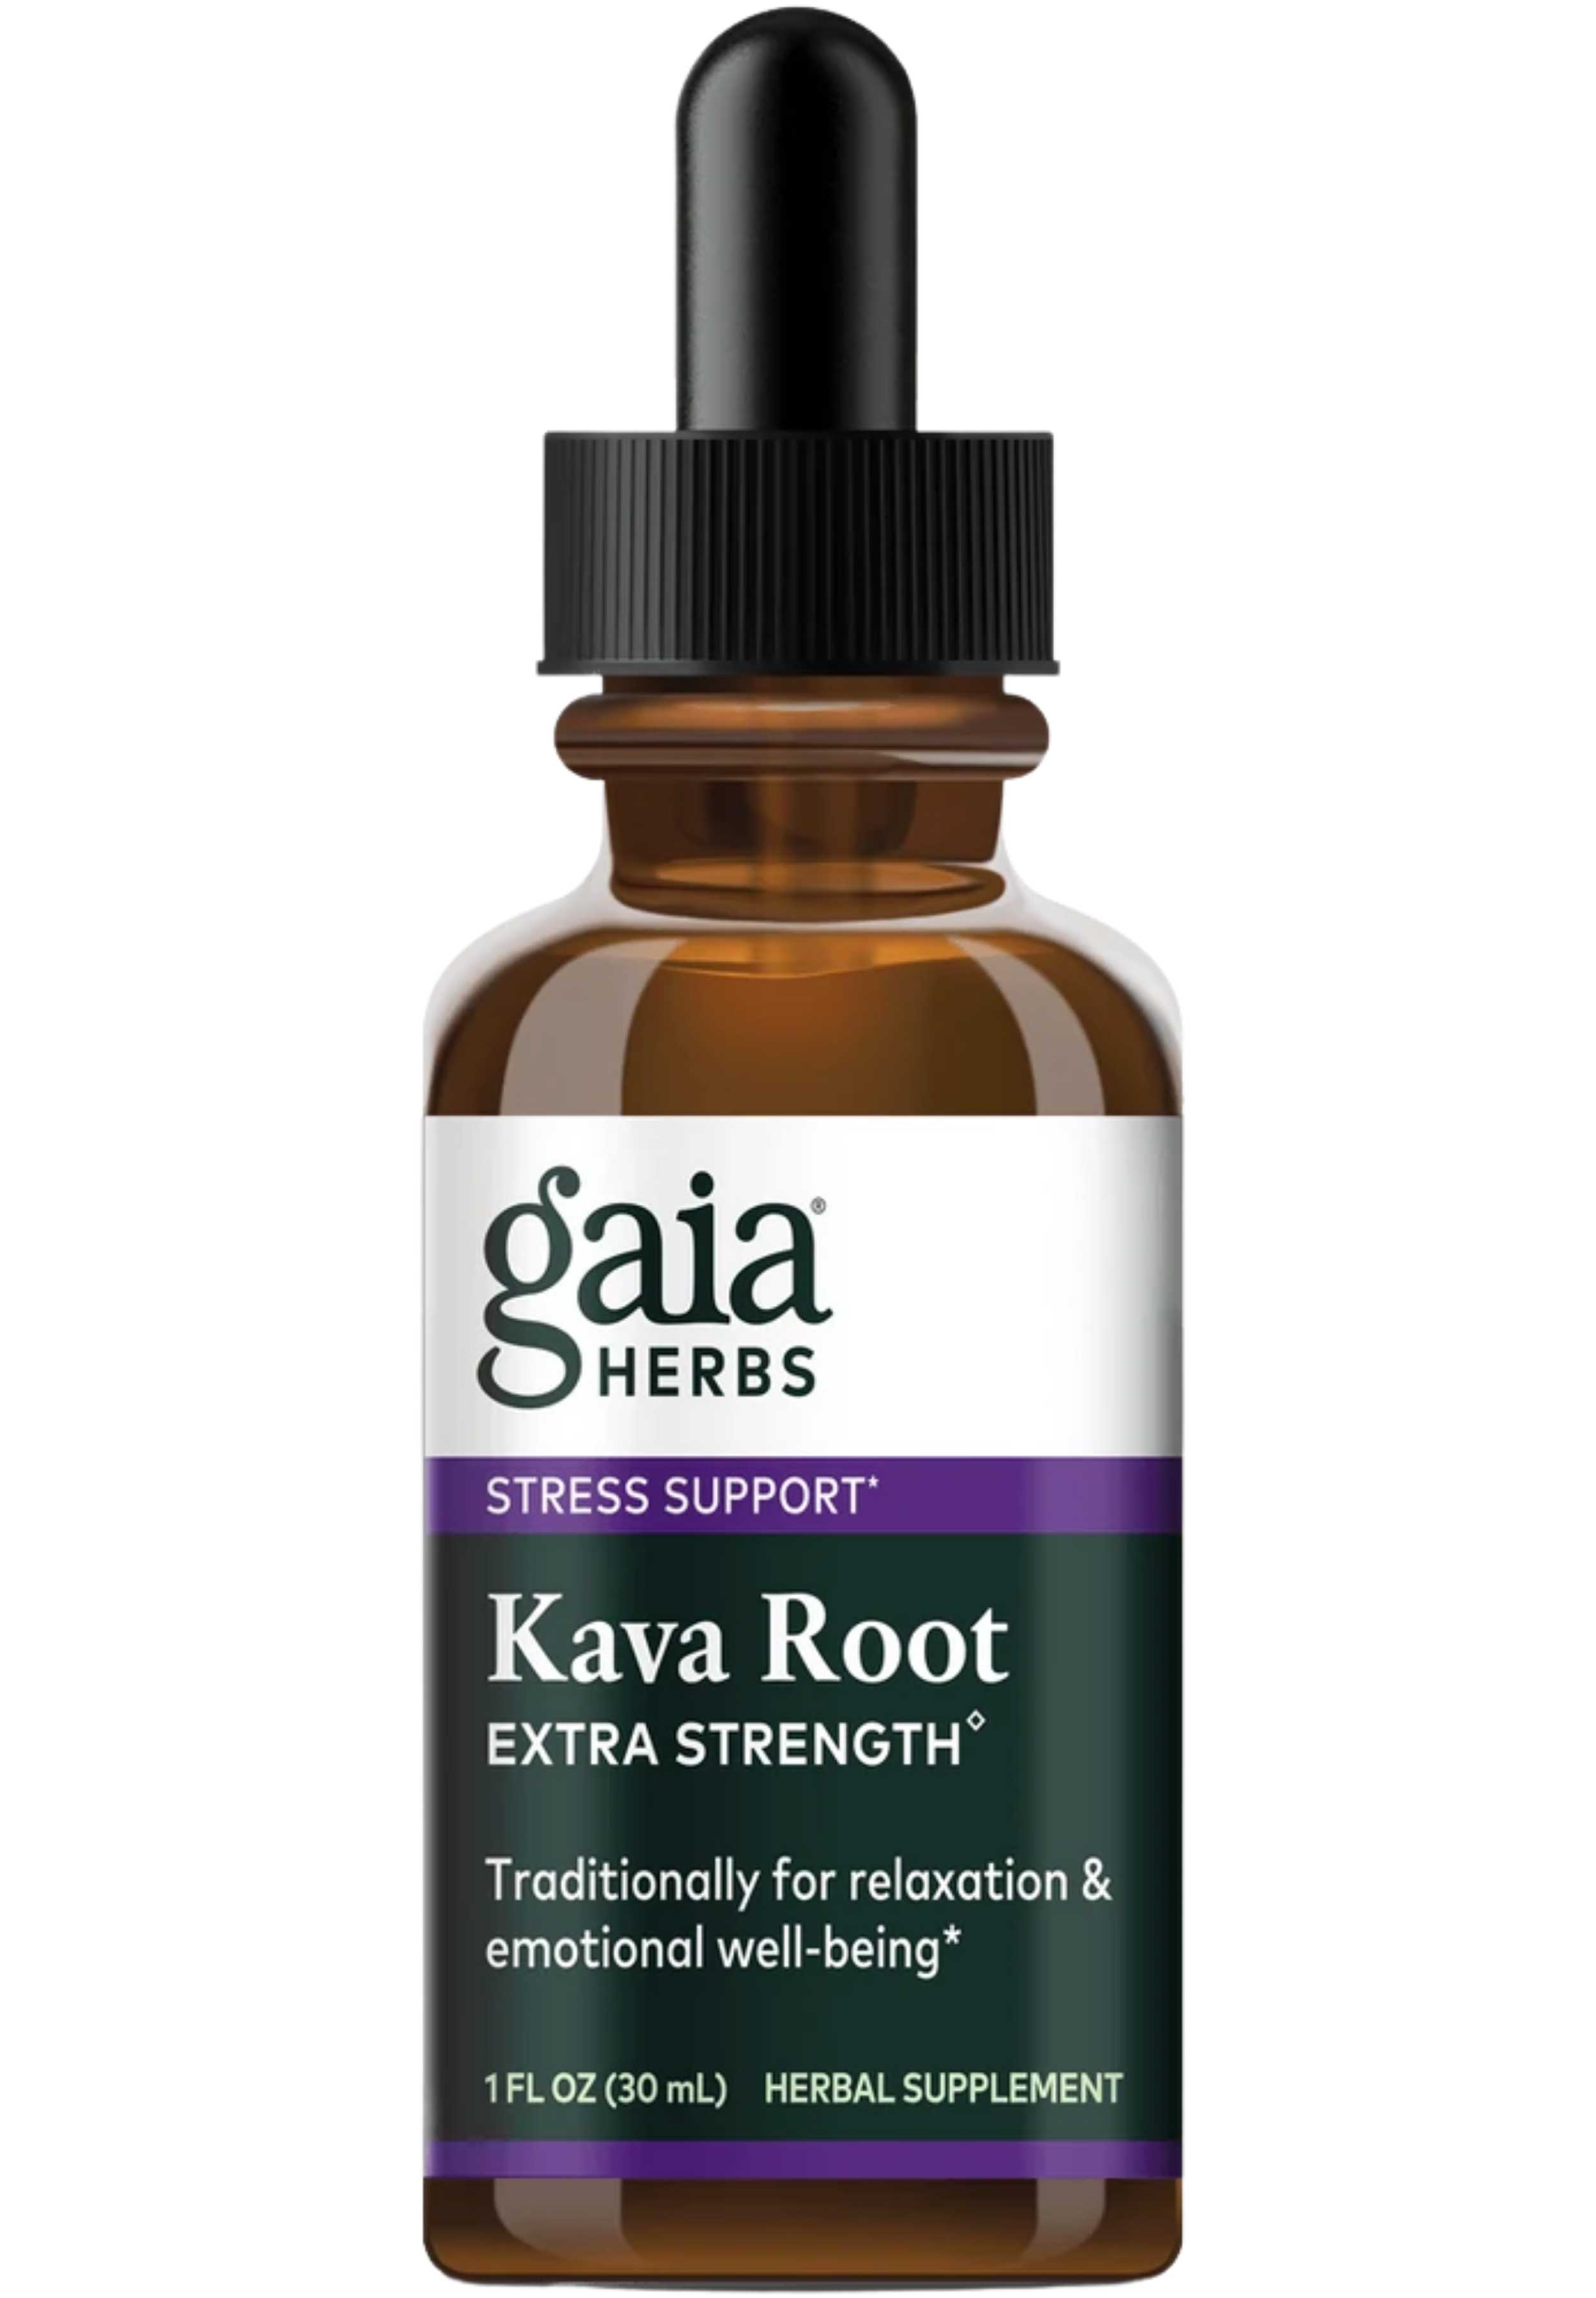 Gaia Herbs Kava Root, Extra Strength